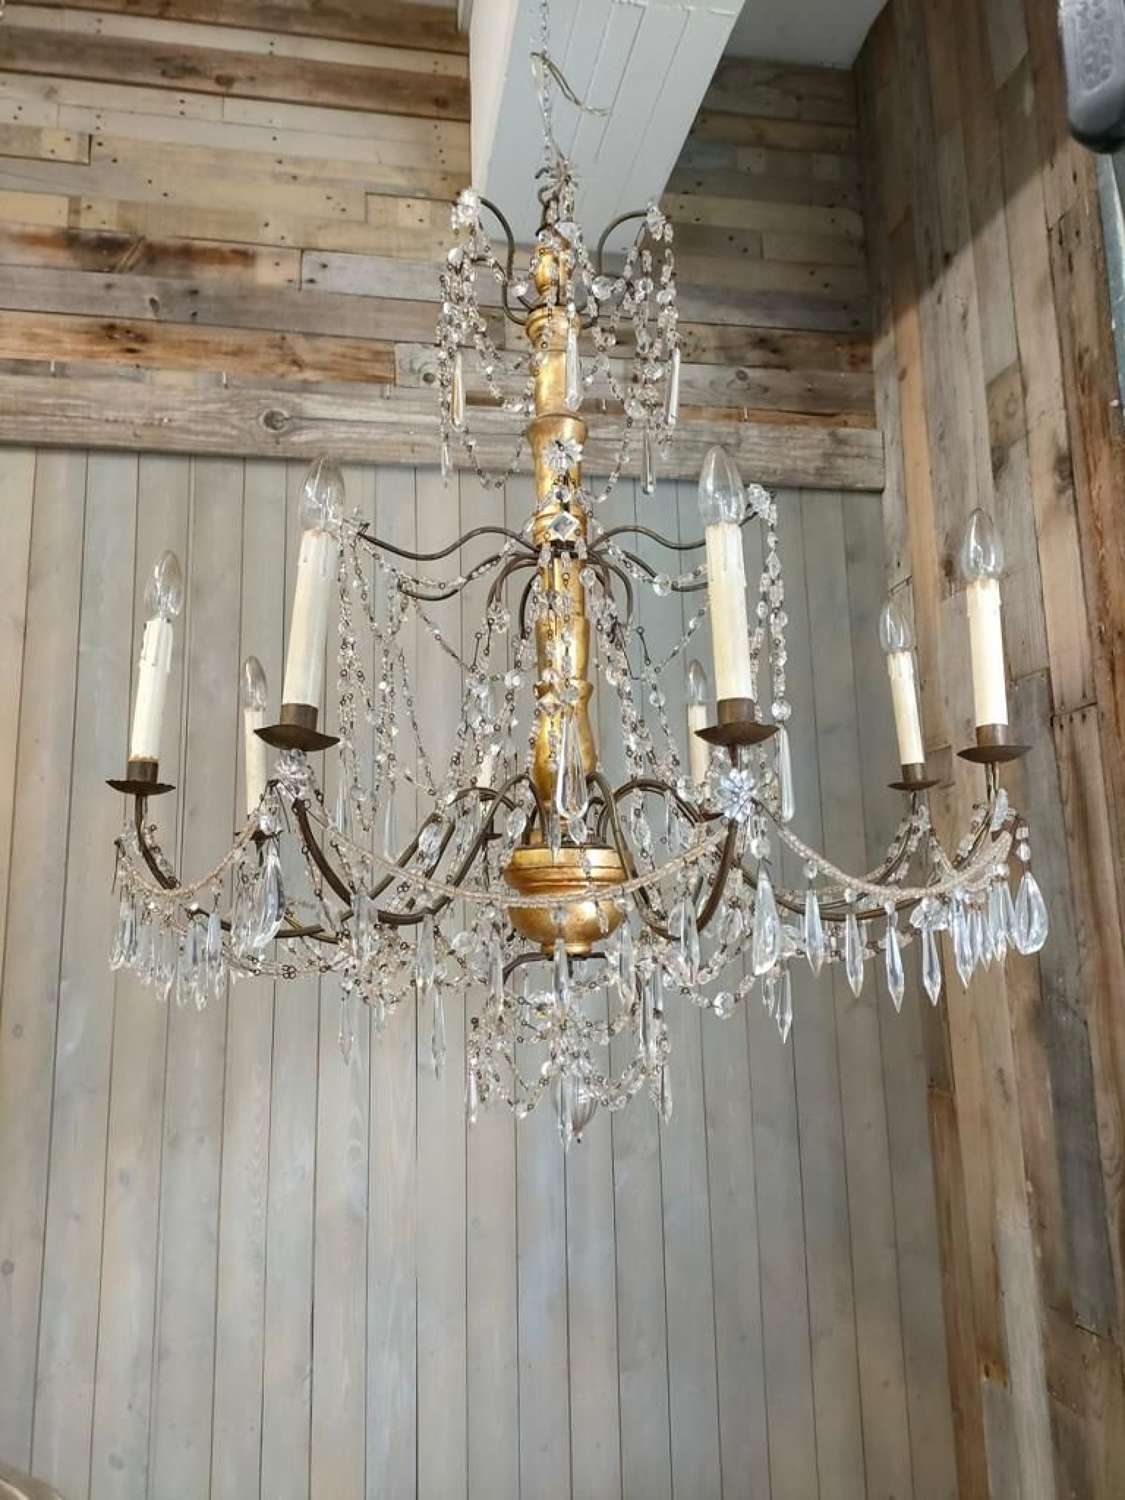 Late 19th century Italian gilt chandelier